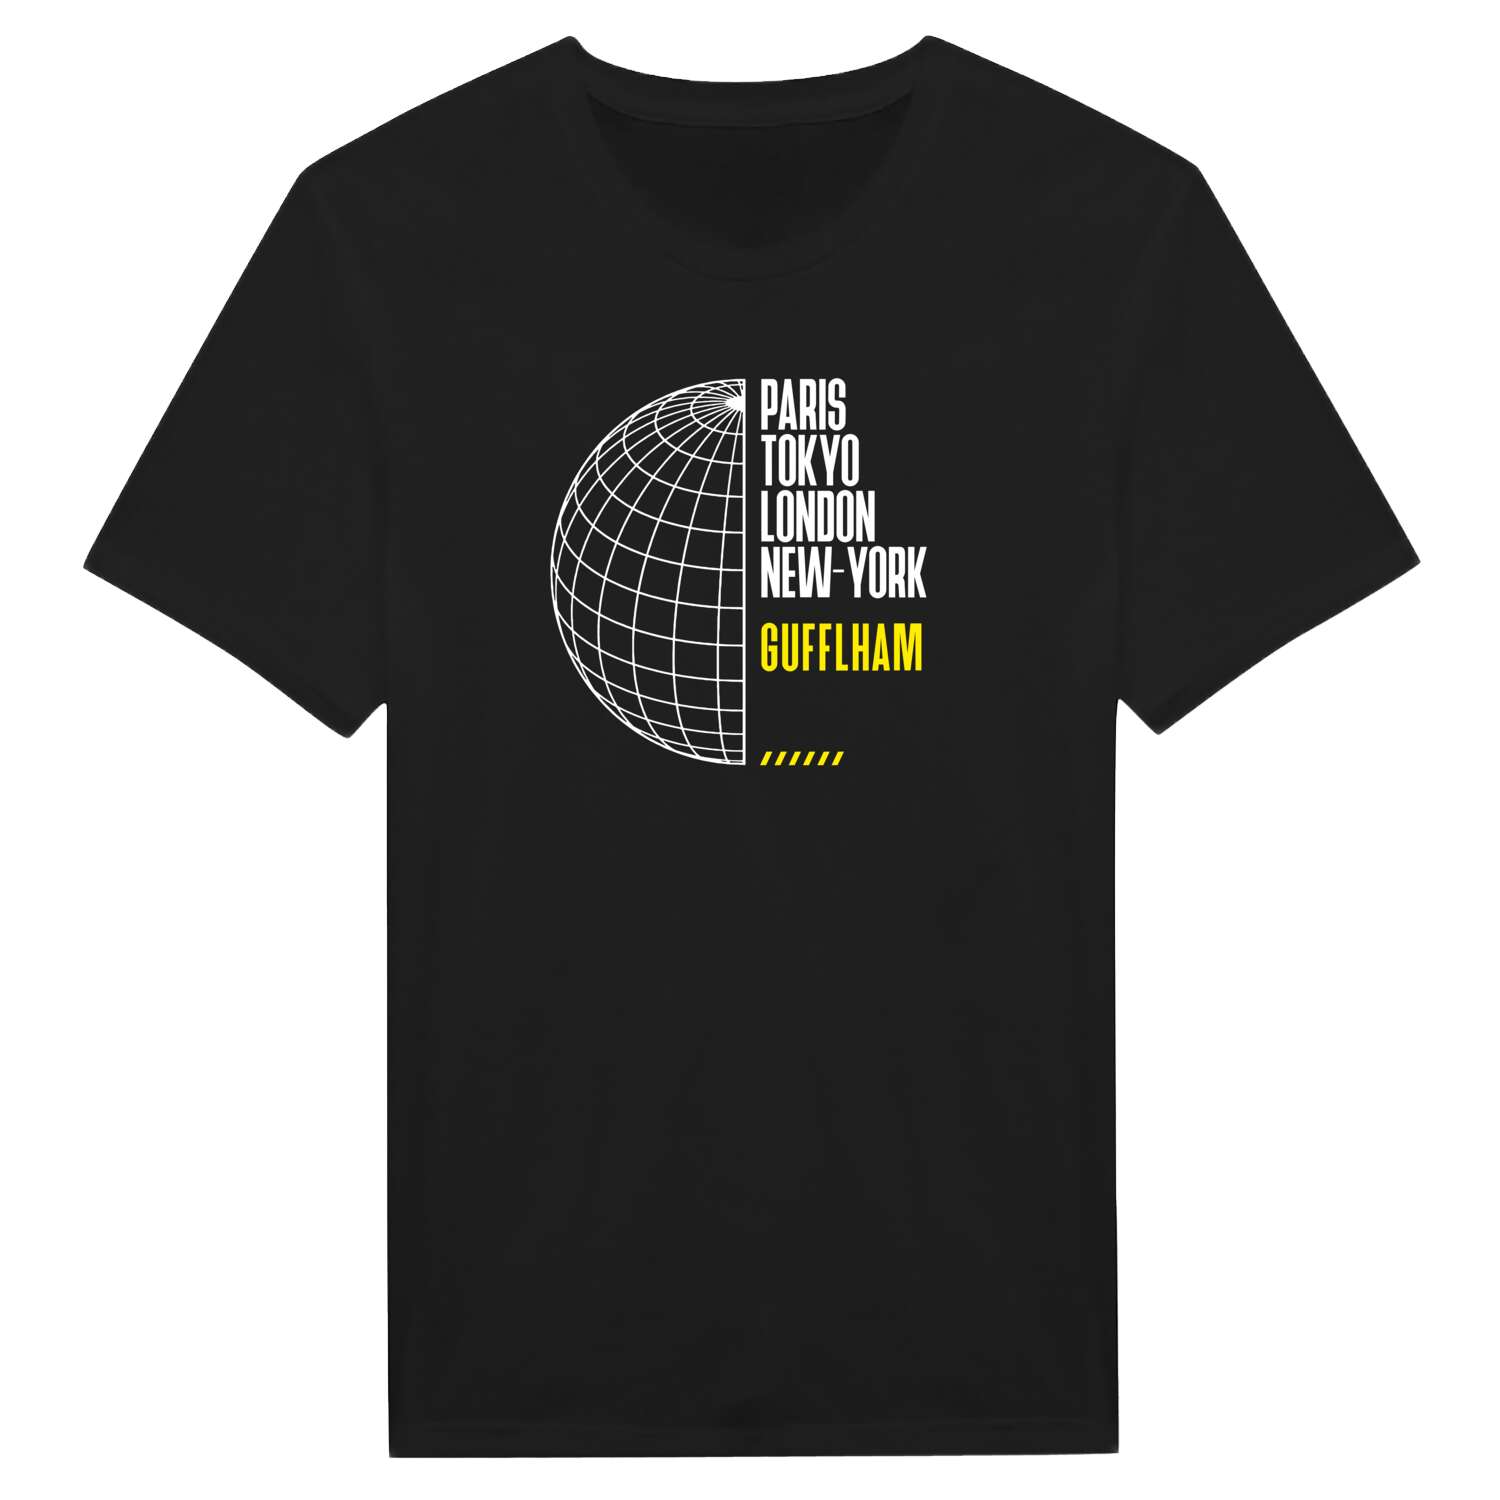 Gufflham T-Shirt »Paris Tokyo London«